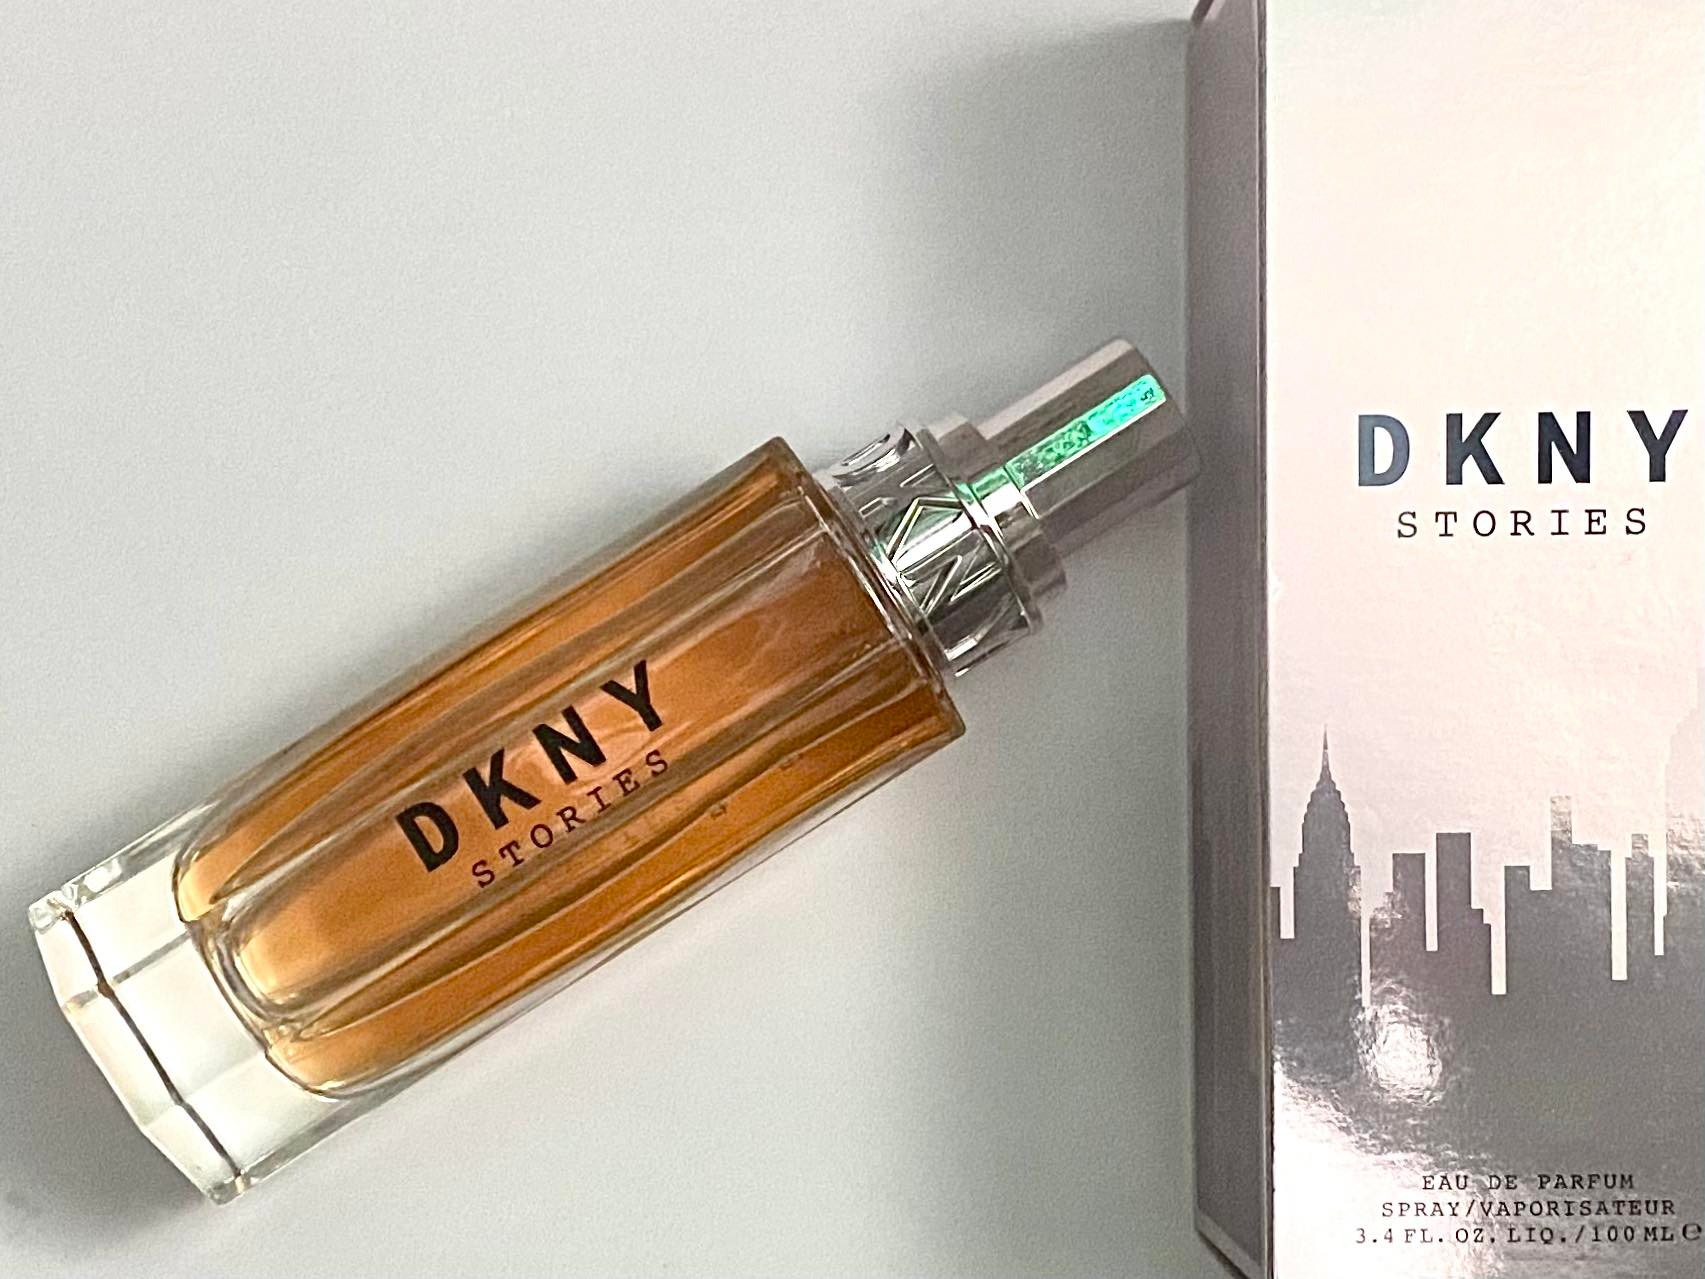 DKNY Tales | Fragrance Posse Candy stuff from Donna Karan